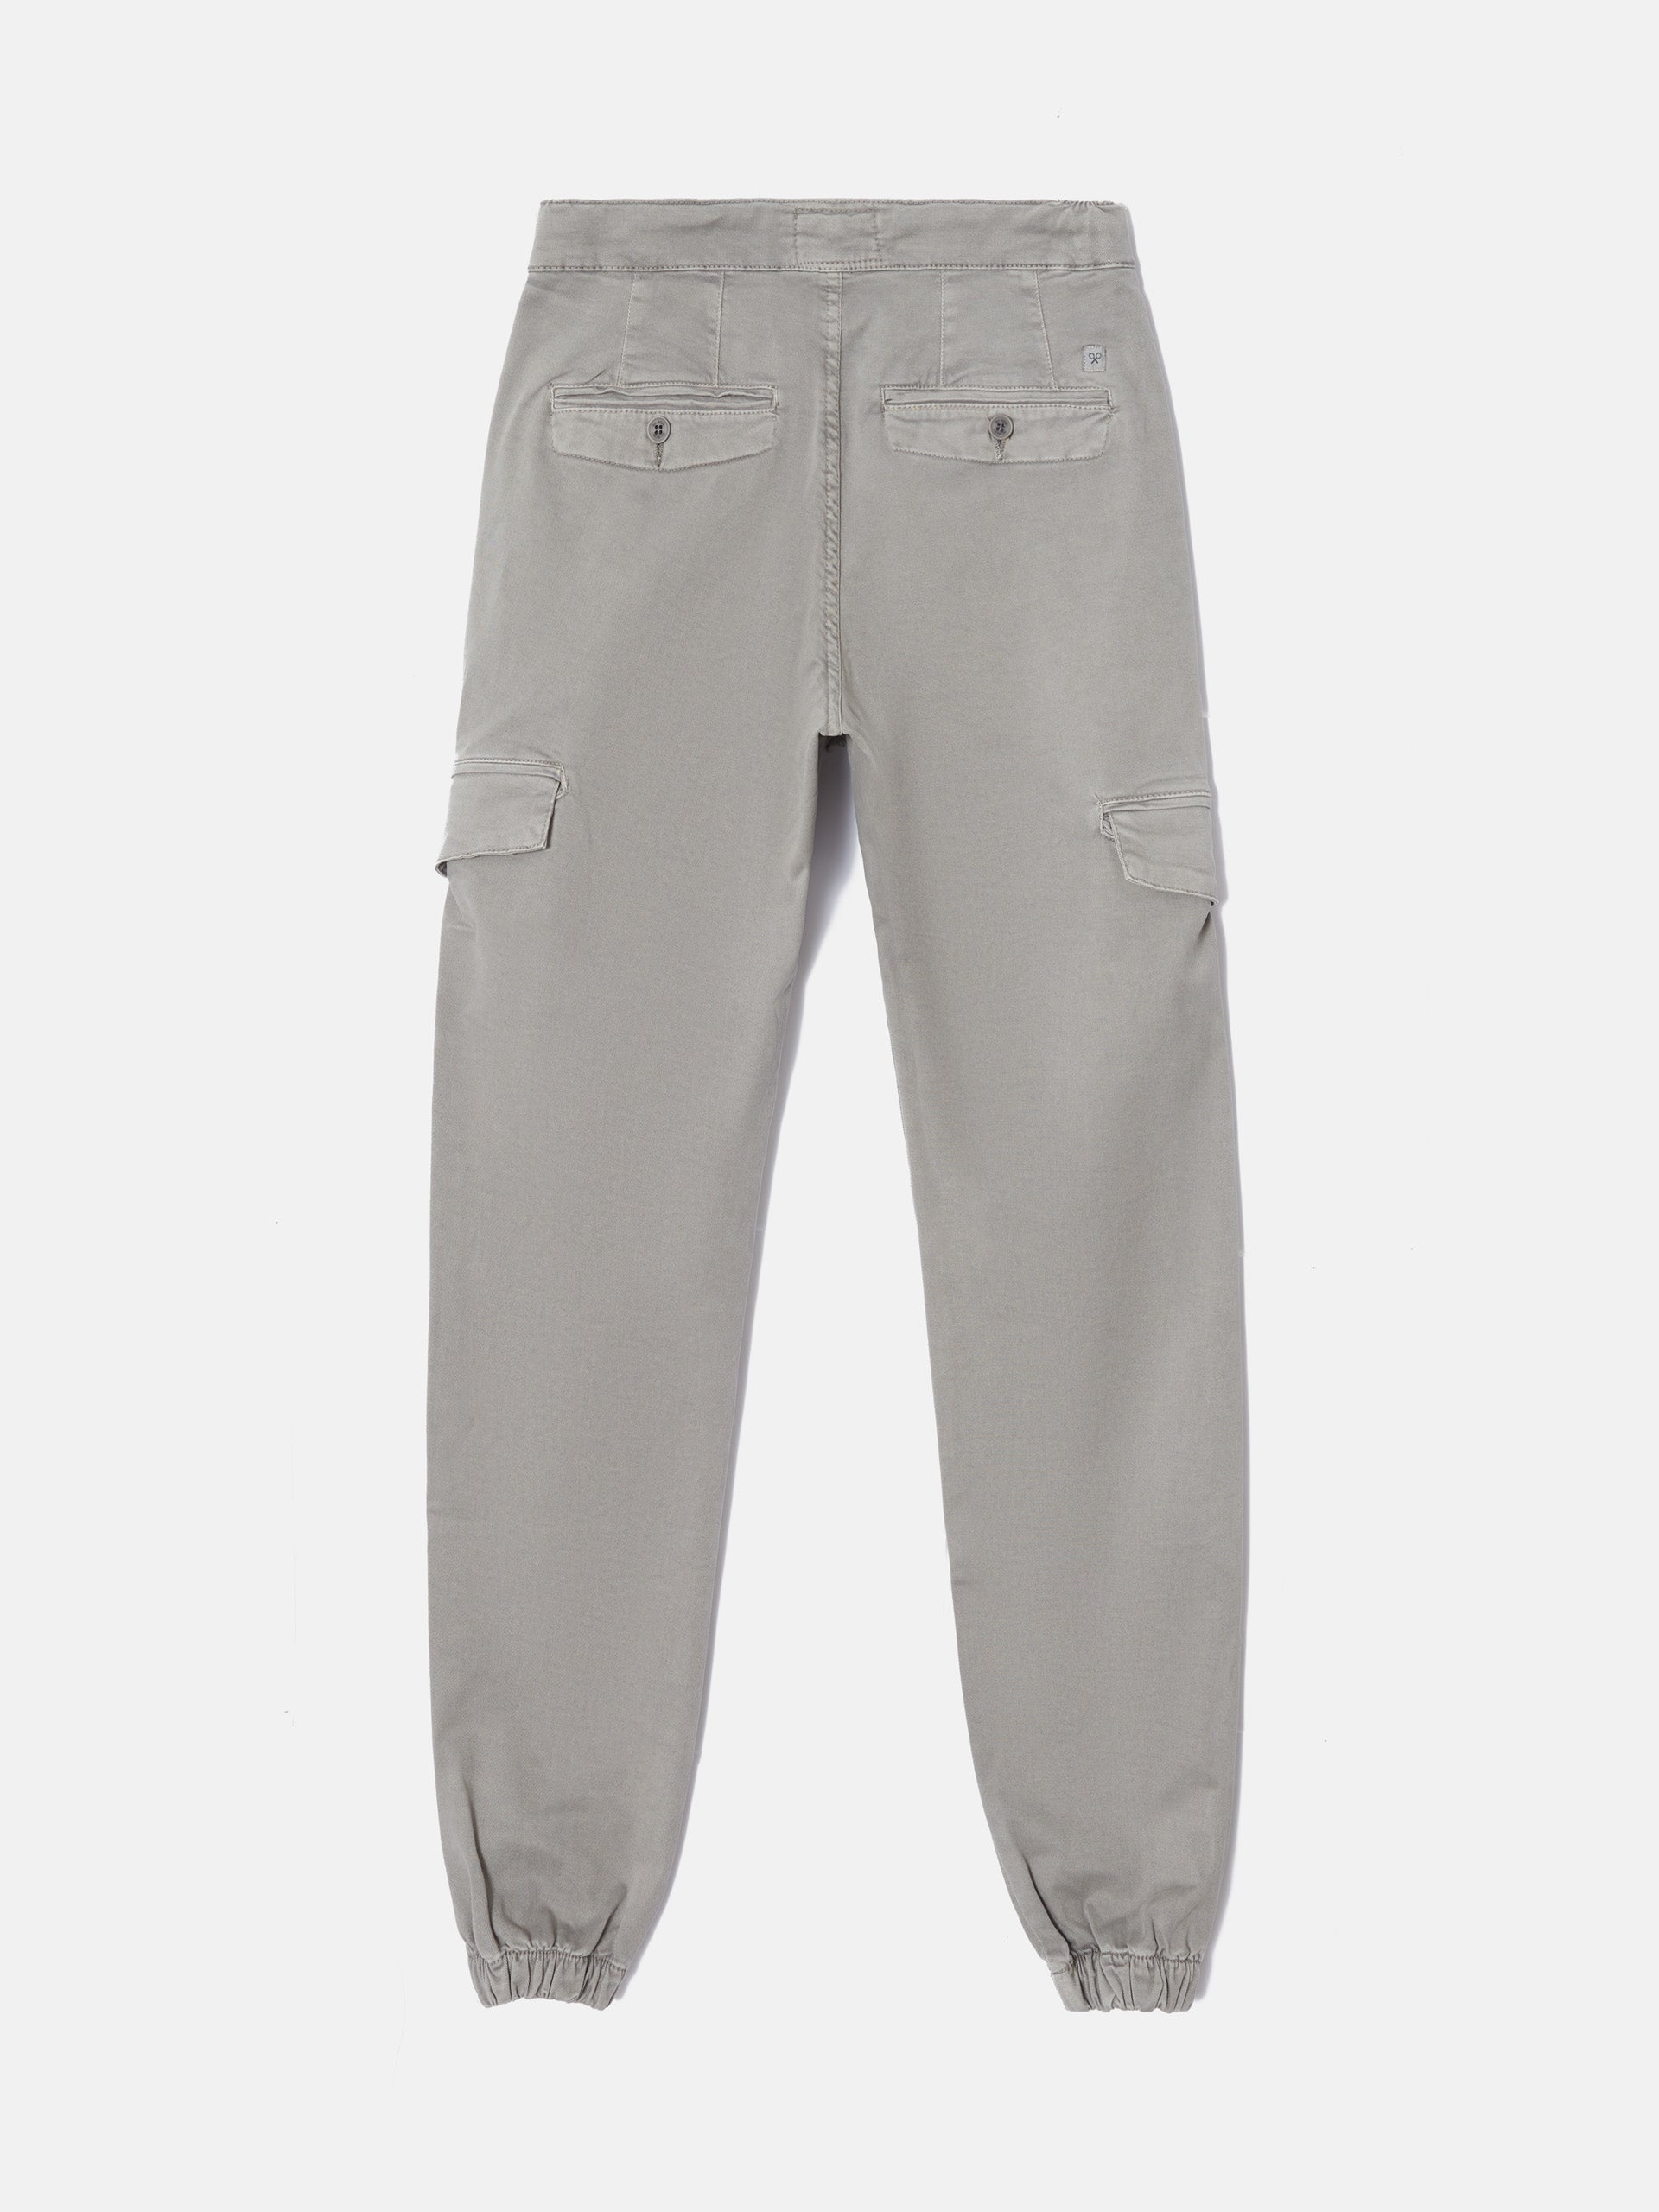 Pantalon sport jogger cargo grey